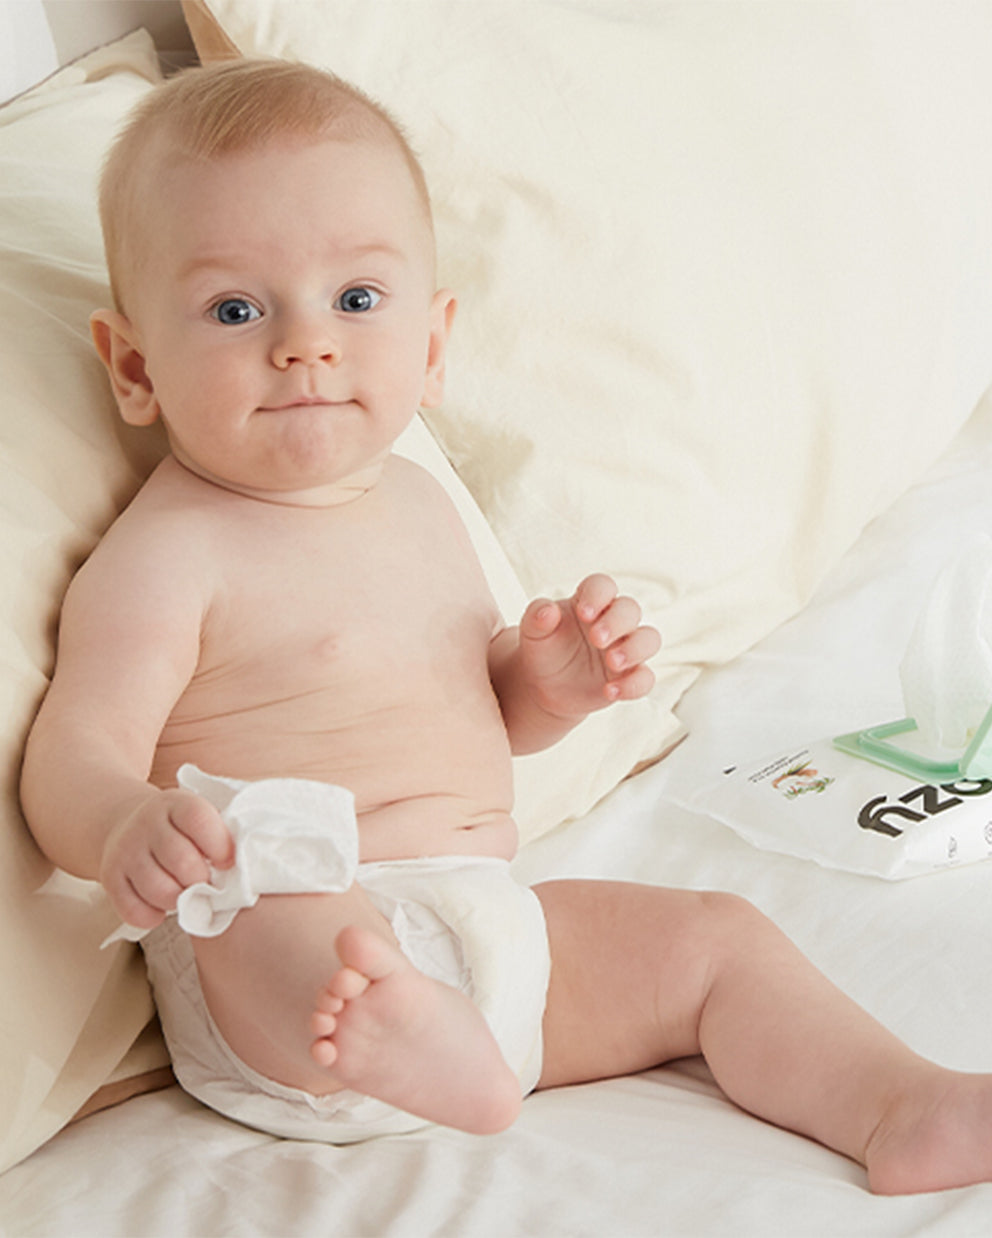 BabyCozy Diapers - Nourish Wipe Mixpacks for Sentive Skin